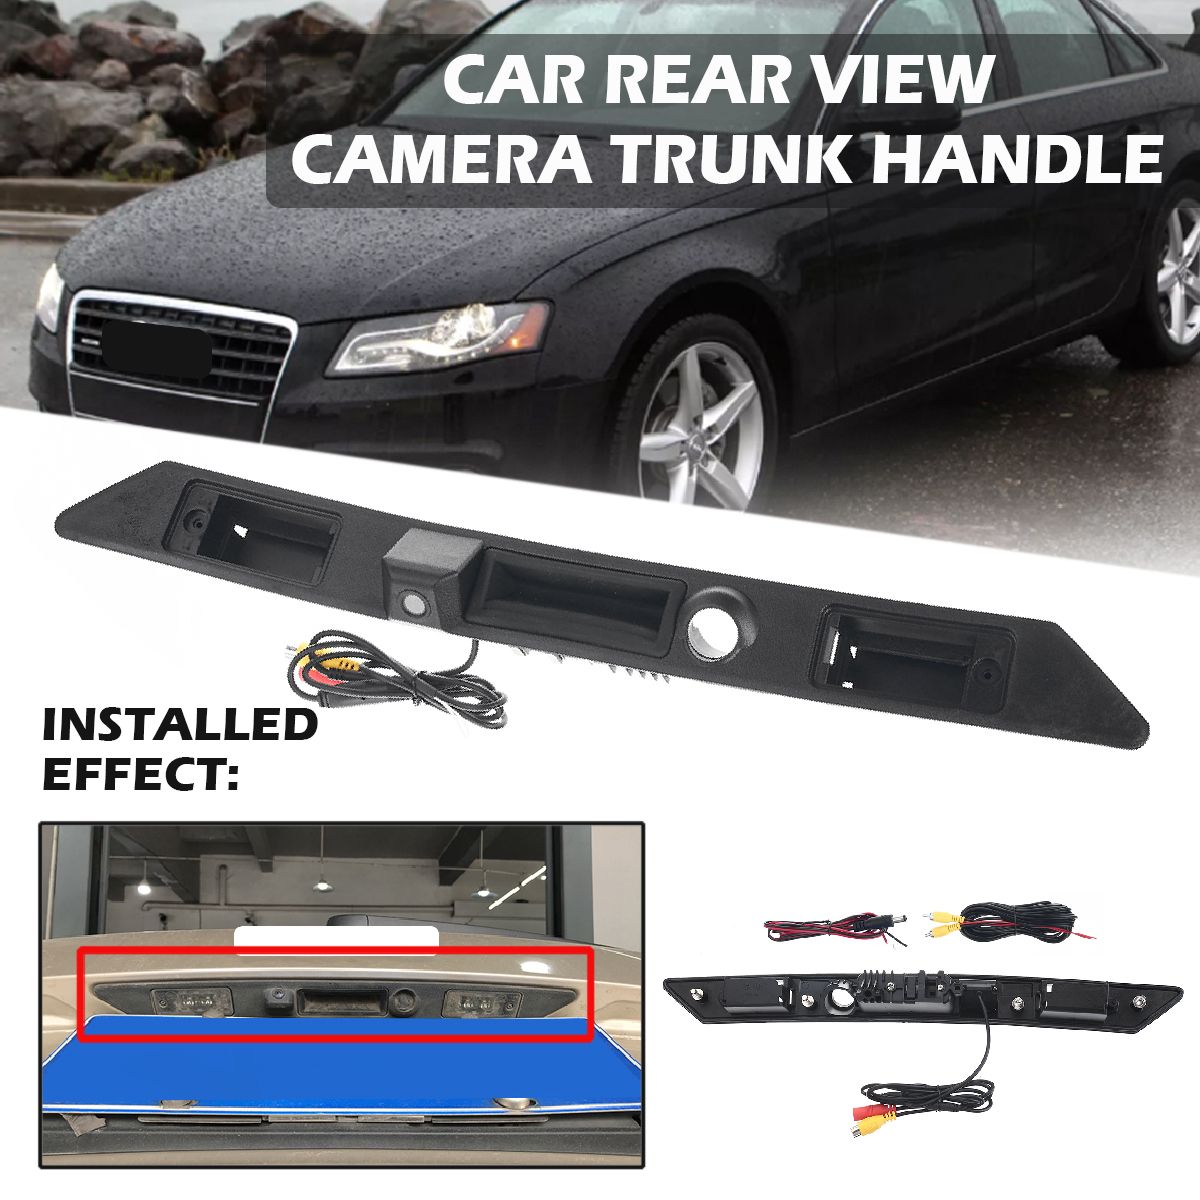 Car-Rear-View-Camera-Trunk-Handle-Set-For-Audi-A4-B7-A3-8P-A6-B6-4F-S3-A3-S4-MK3-1684445